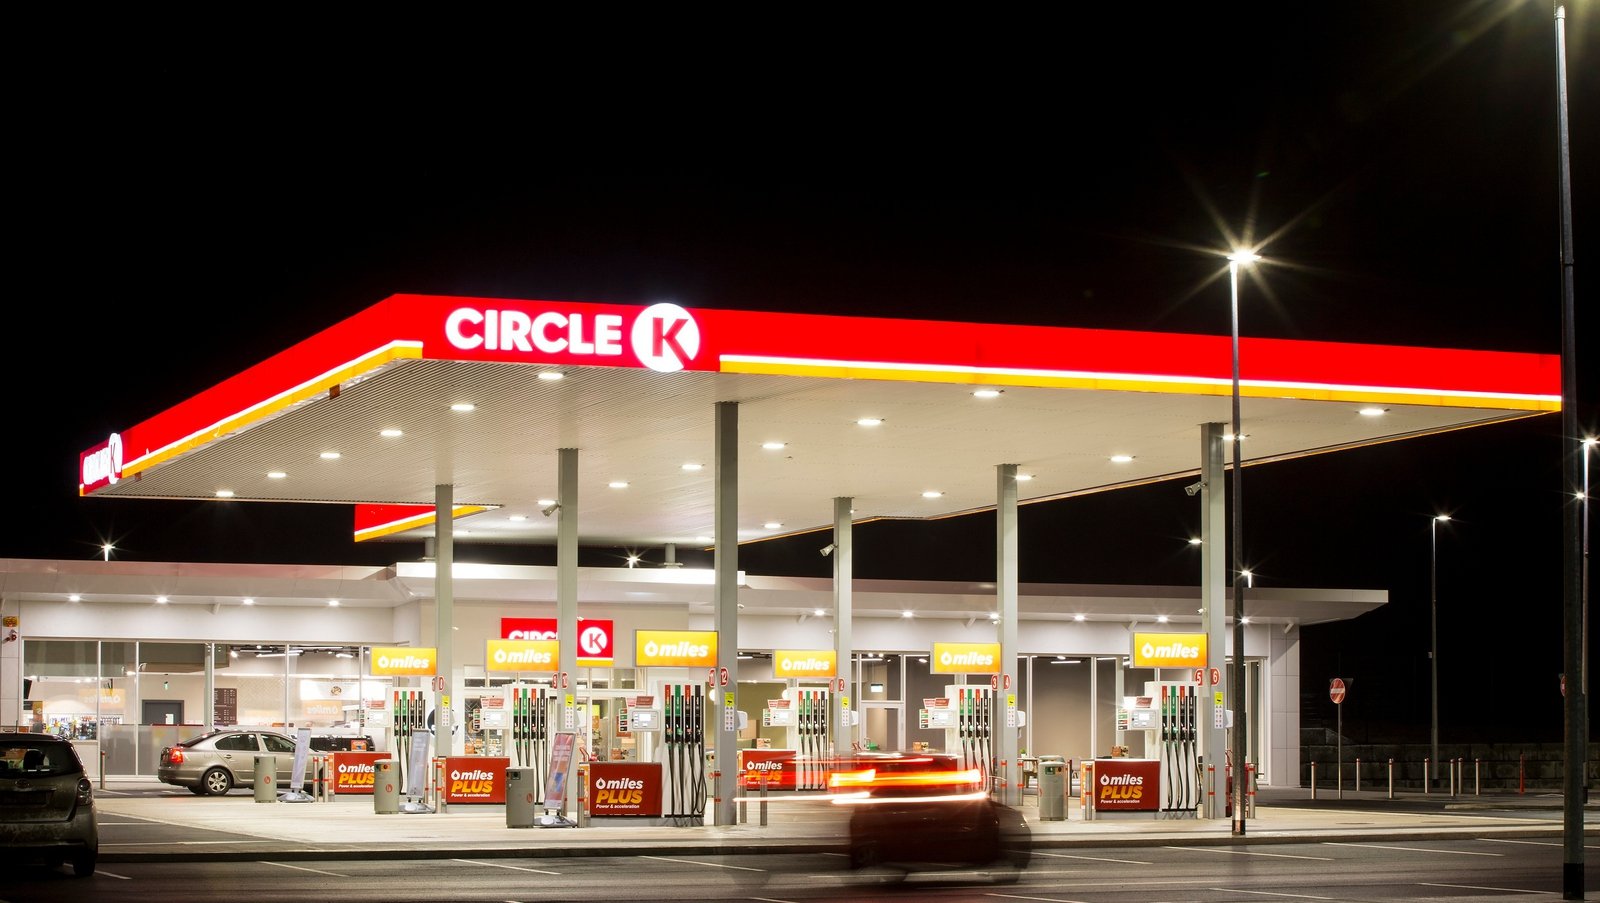 €20m to be spend on rebranding to Circle K